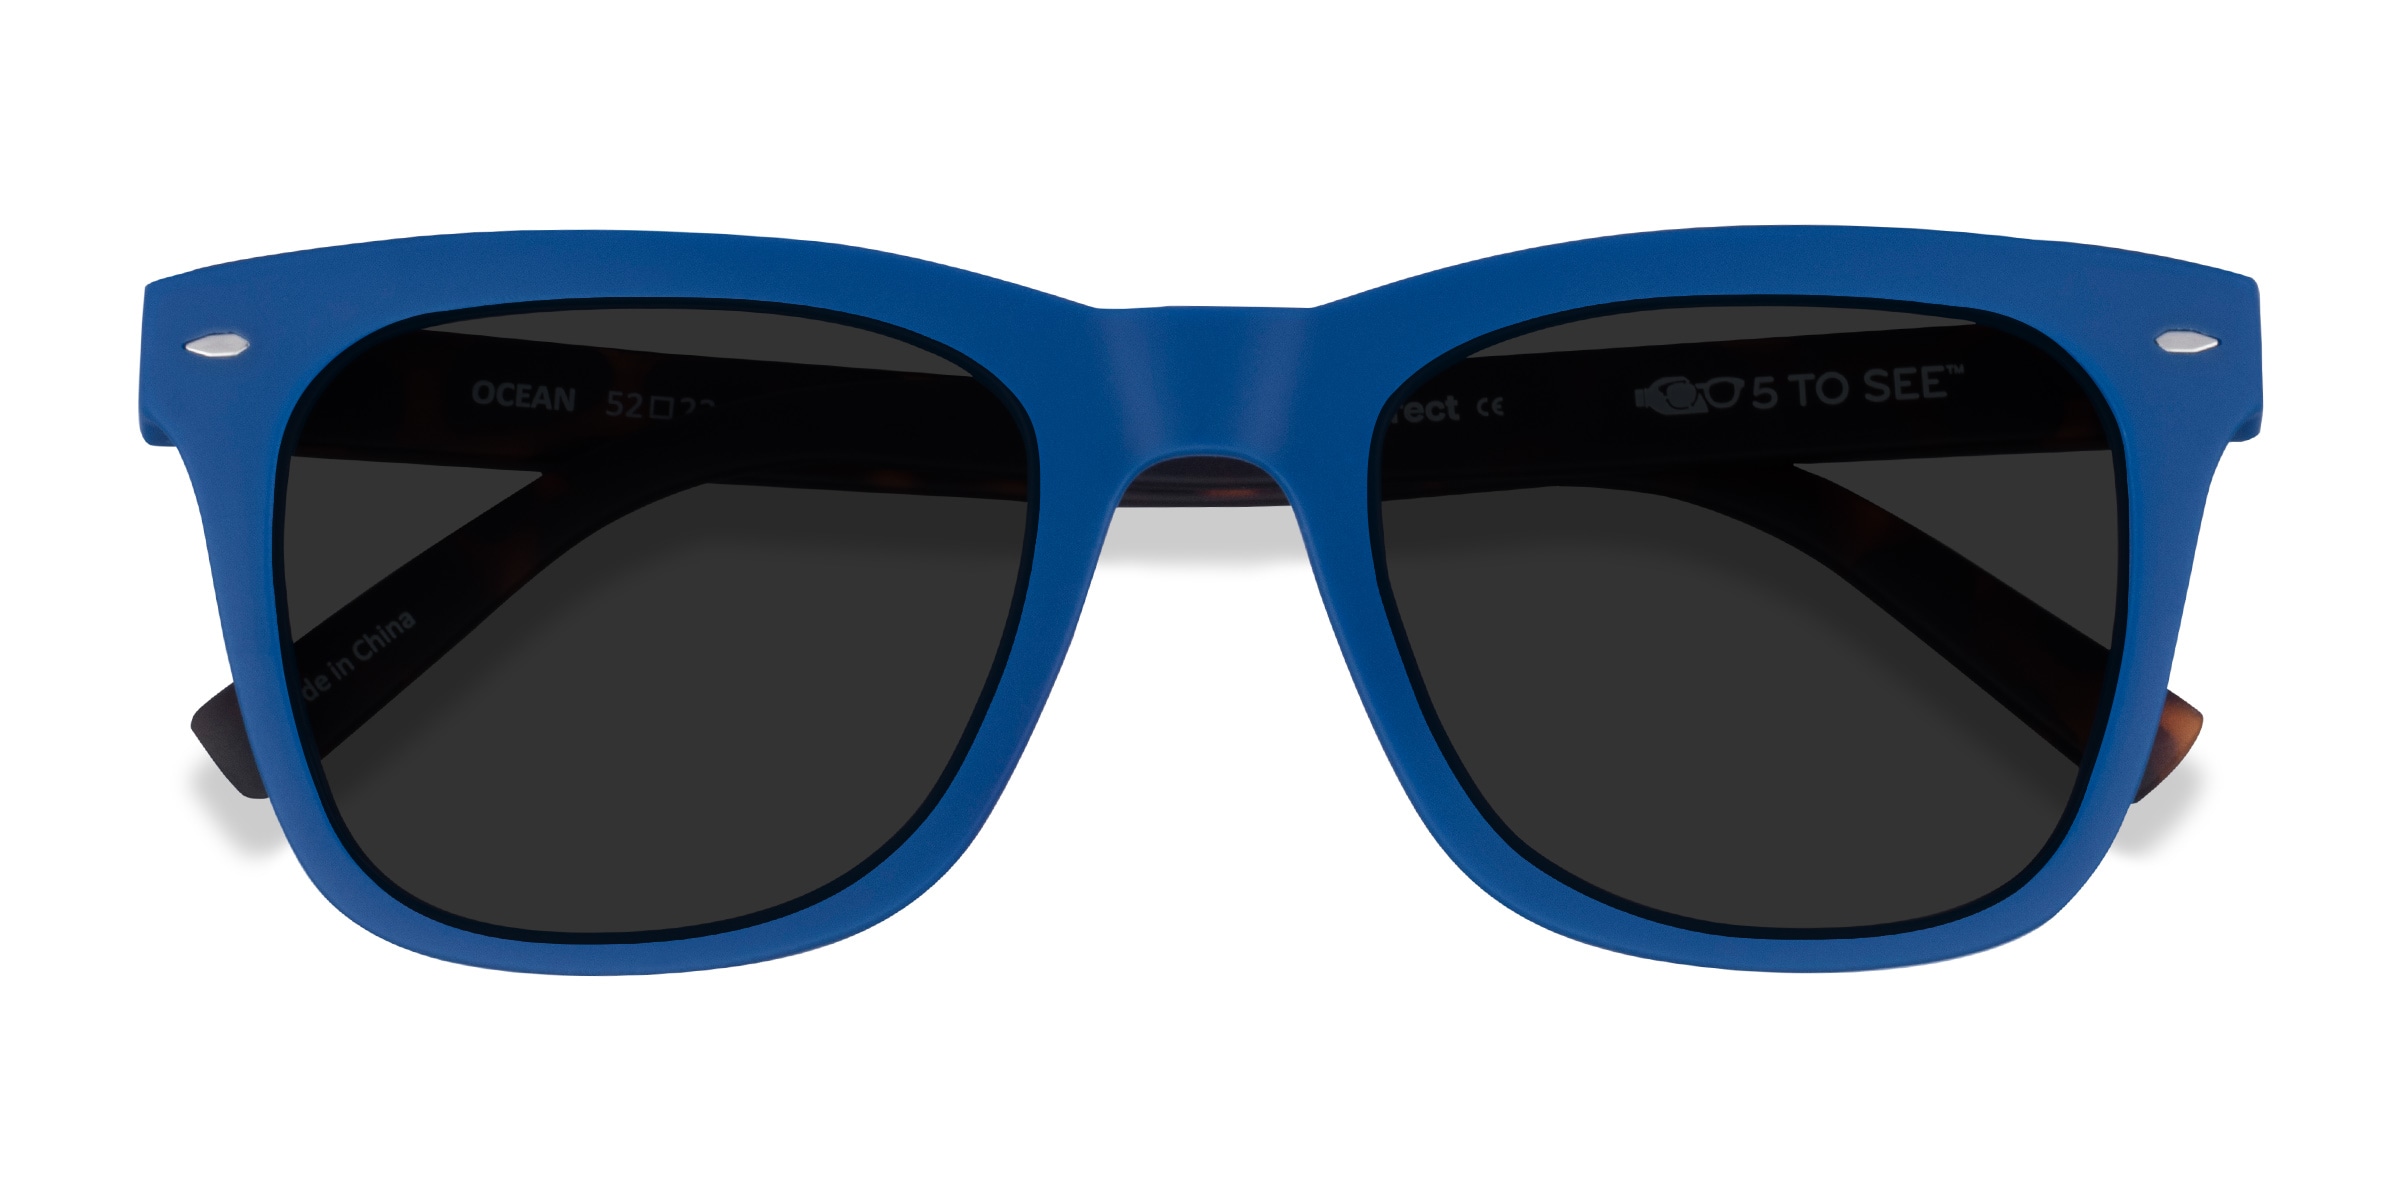 Buy NuVew Mirrored Aviator Unisex Sunglasses - (Ice Blue-Purple Mirror Lens  | Gun Frame | Medium) at Amazon.in